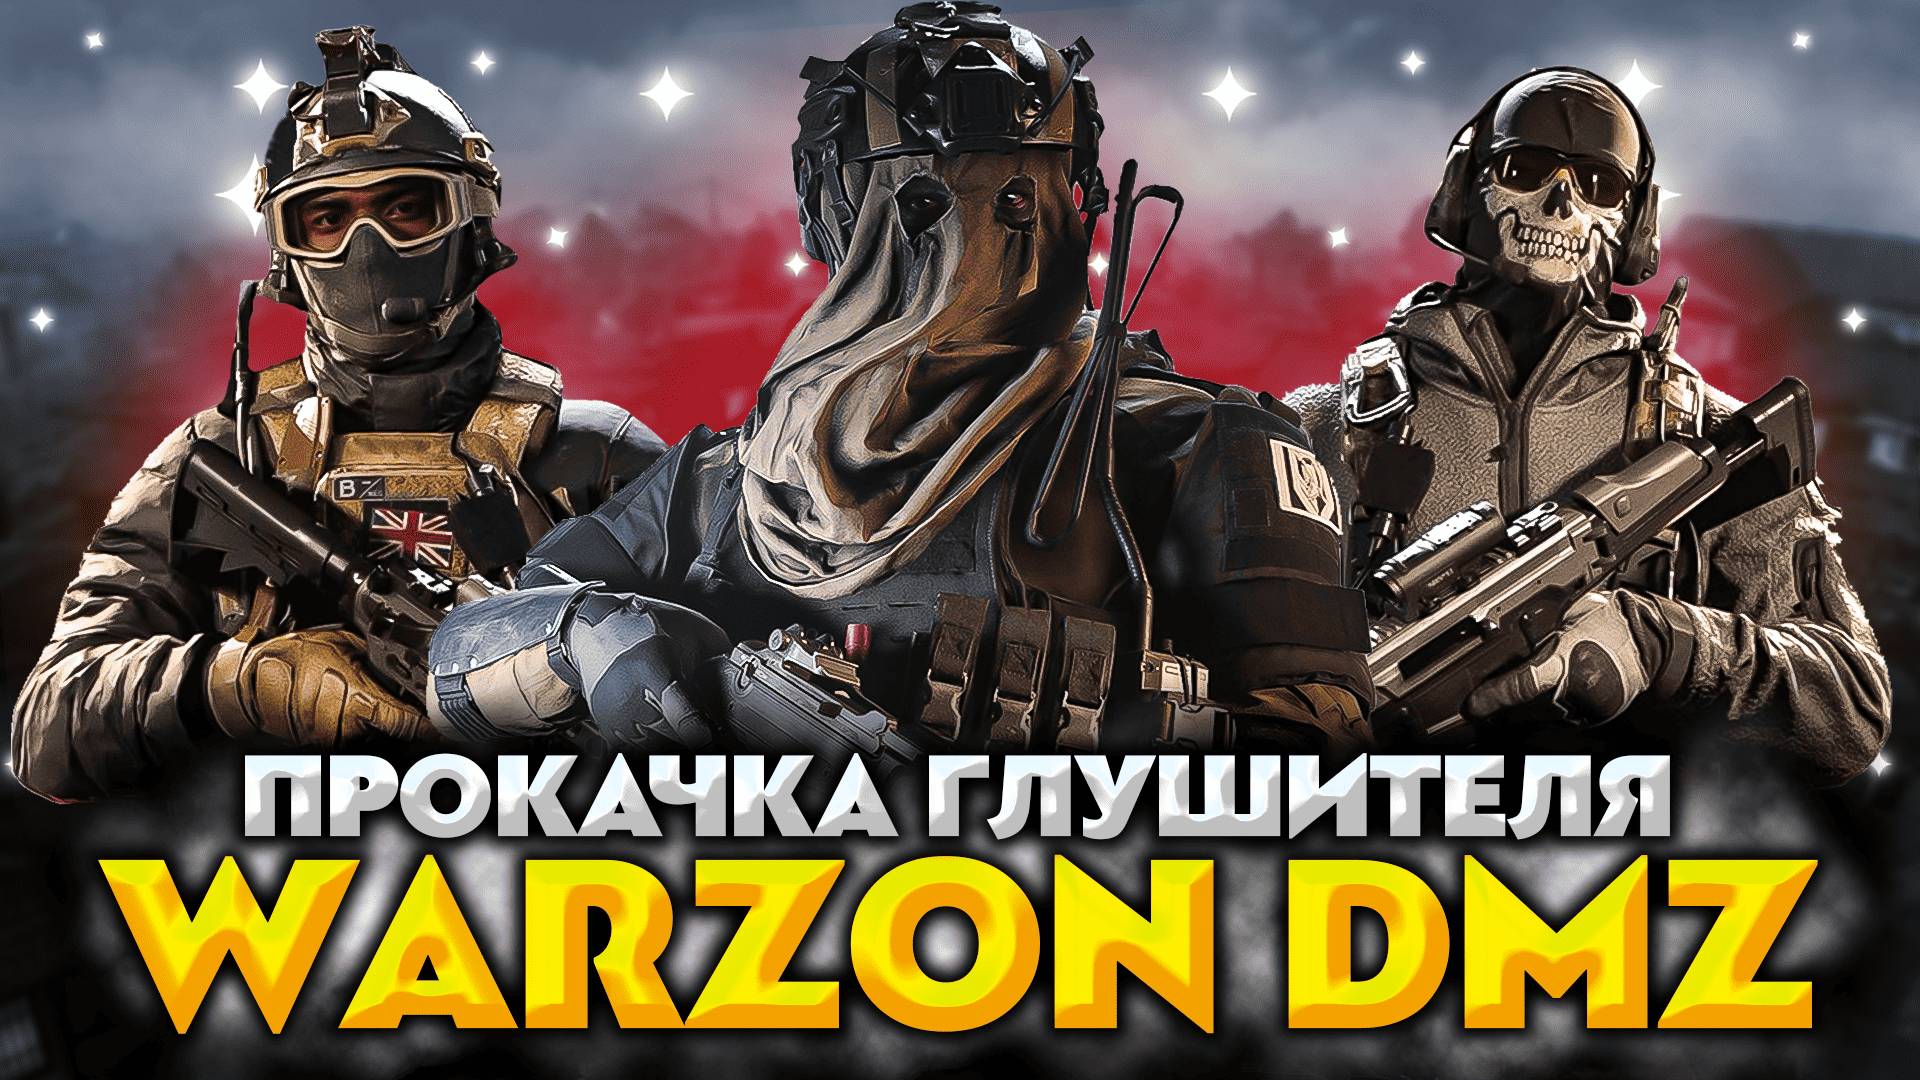 WARZON 3 DMZ  💥 ОПЕРАЦИЯ "ГЛУШИТЕЛЬ" 💥 РЕЖИМ НОВИЧОК